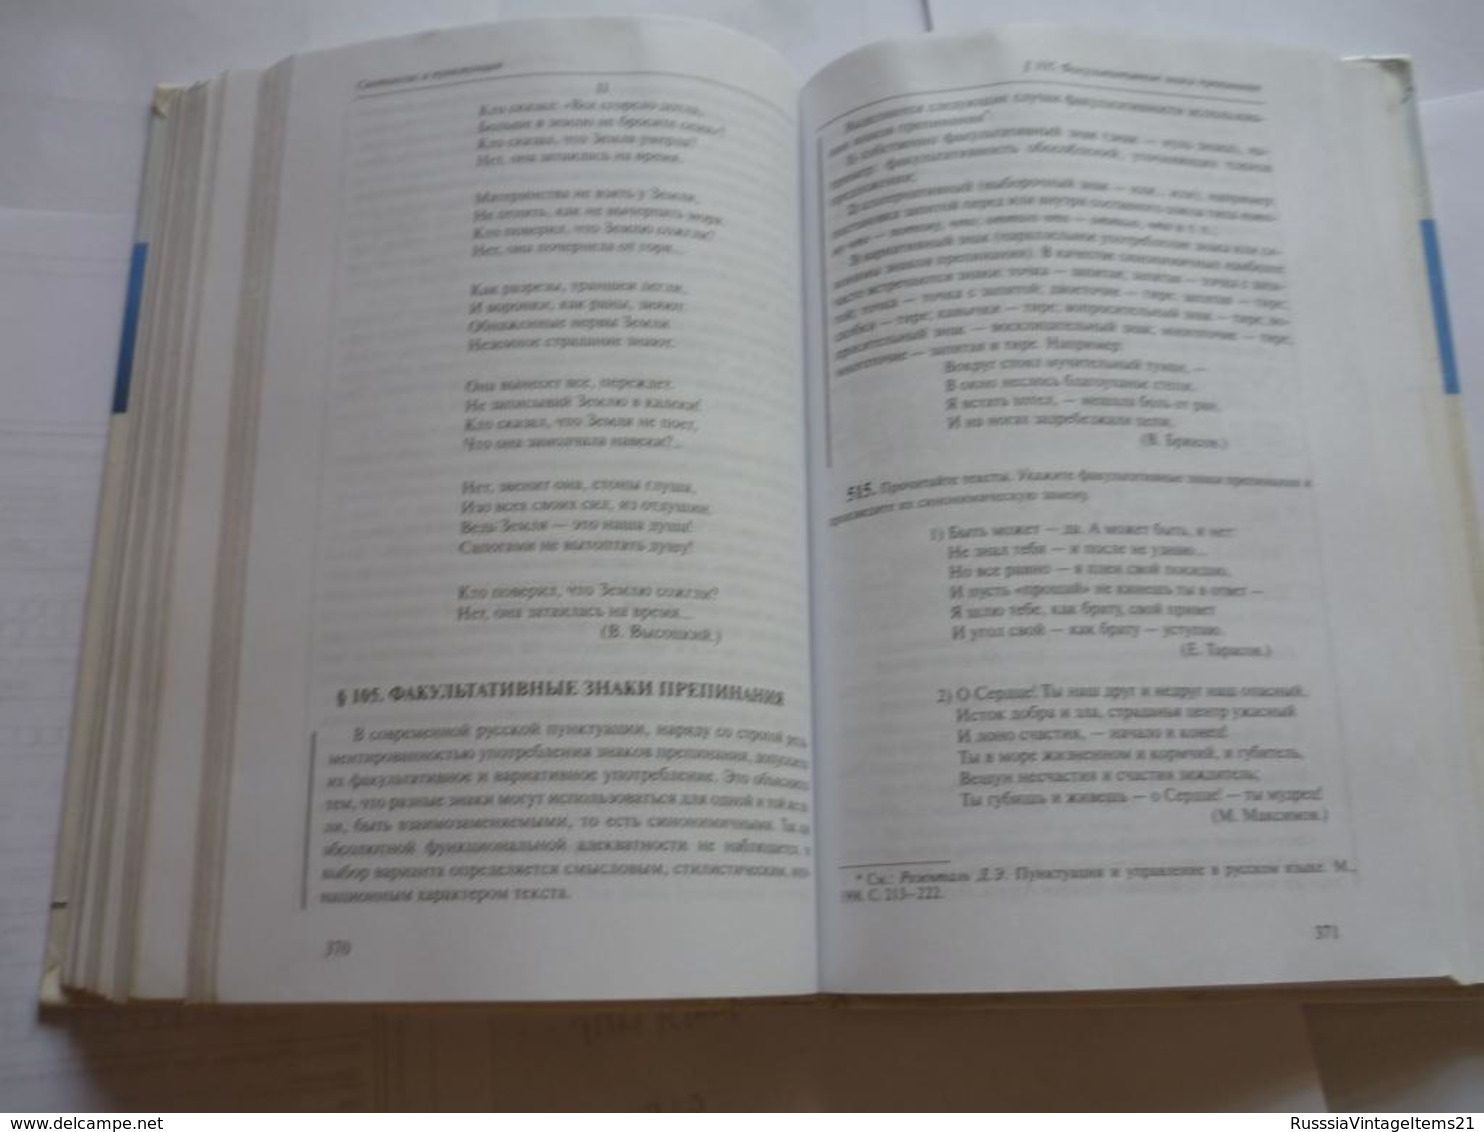 Russian Textbook - In Russian - Textbook From Russia - Goltsova N .; Shamshin I. - Russian Language. Grades 10-11 - Lingue Slave